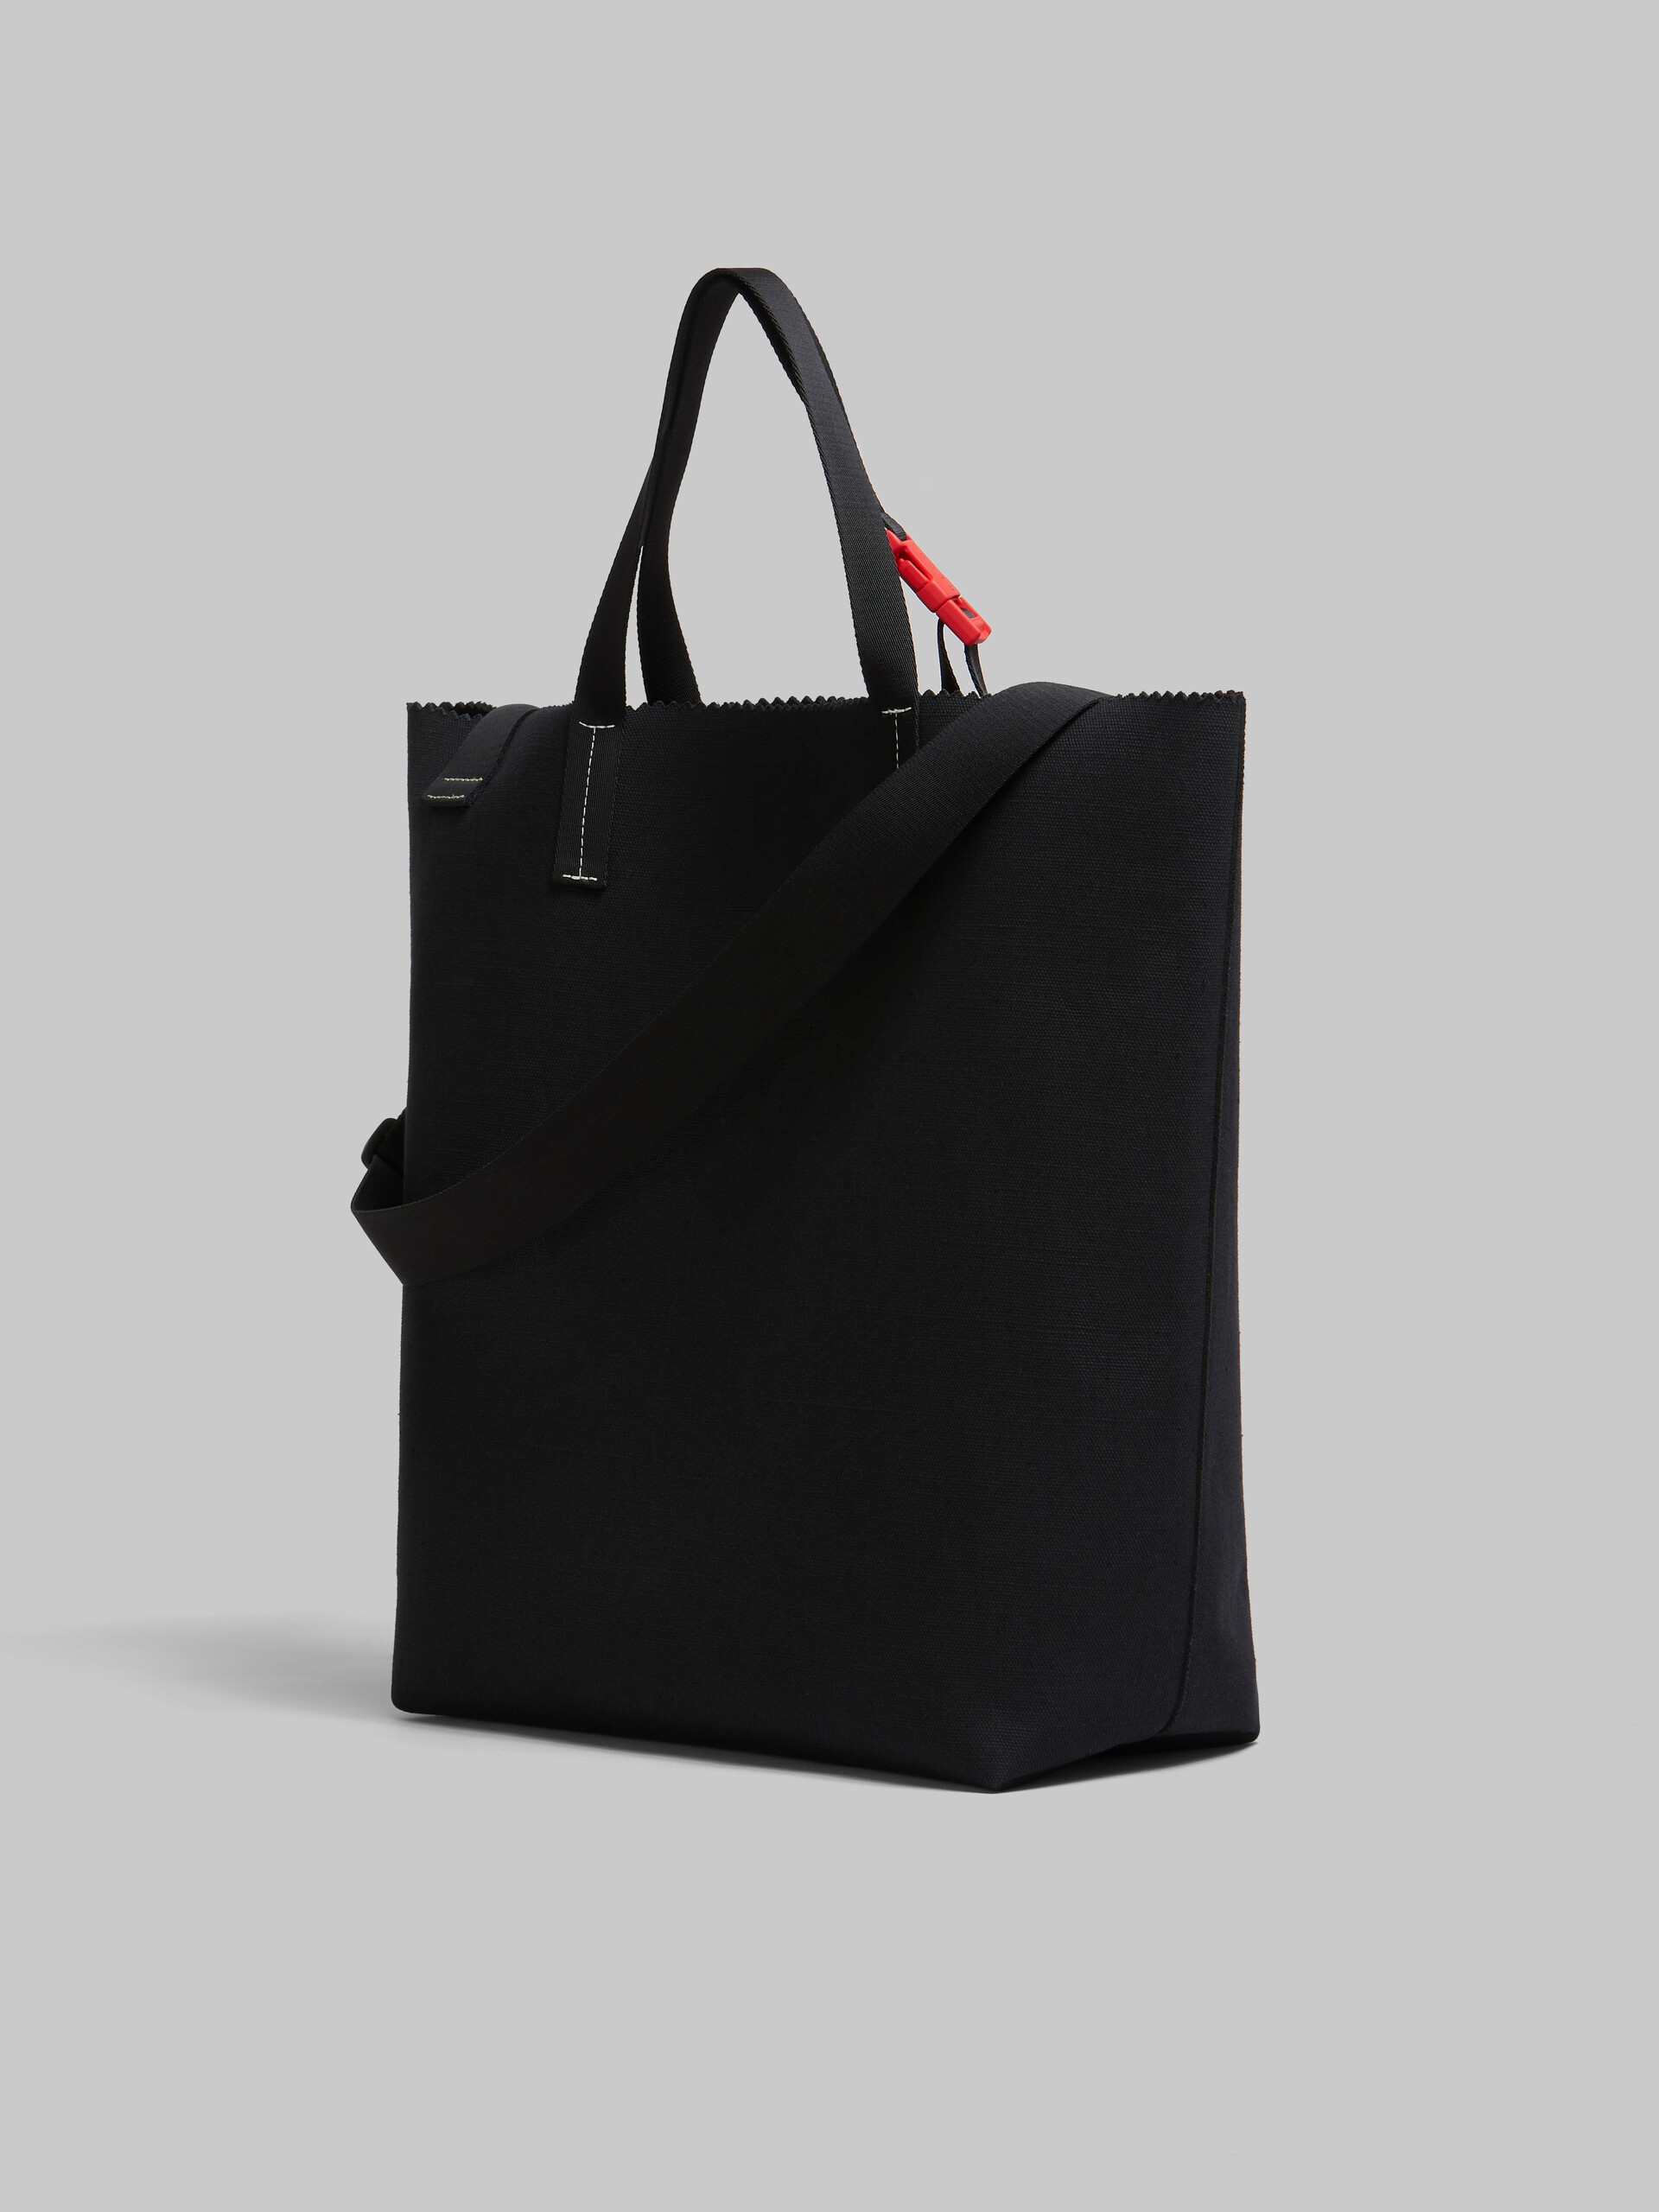 Tribeca Shopping Bag in tela nera con logo Marni in rilievo - Borse shopping - Image 3